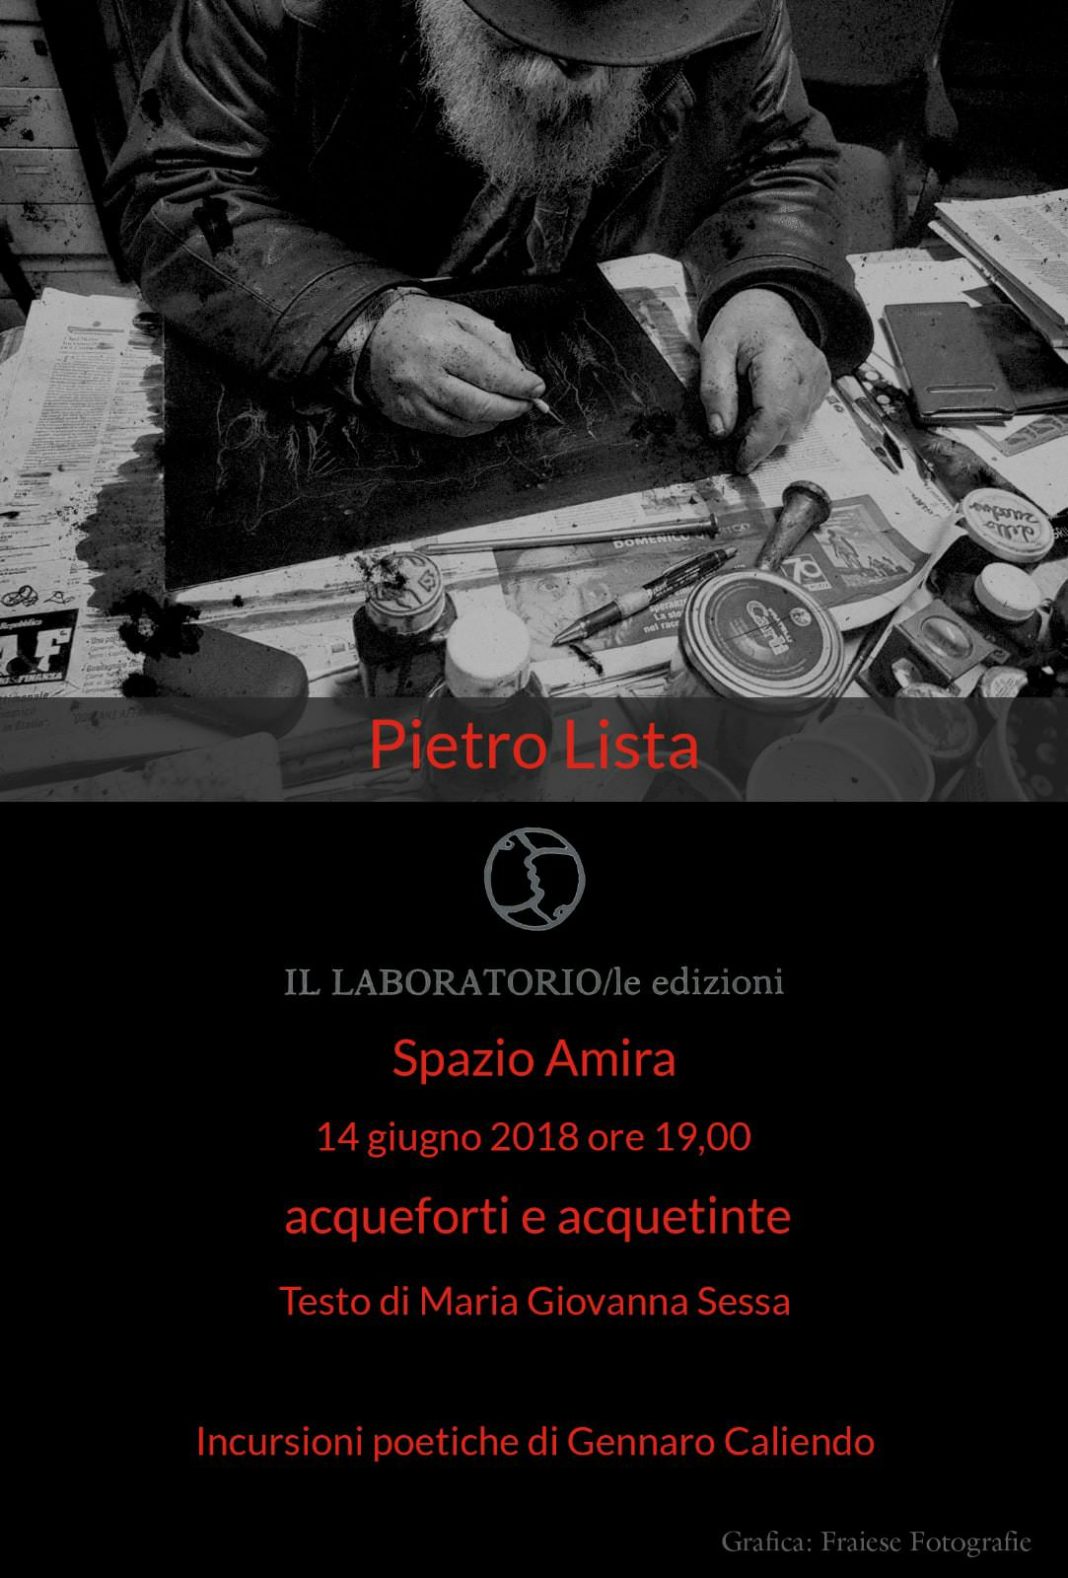 Pietro Lista – Acqueforti e acquetintehttps://www.exibart.com/repository/media/eventi/2018/05/pietro-lista-8211-acqueforti-e-acquetinte-1068x1578.jpg